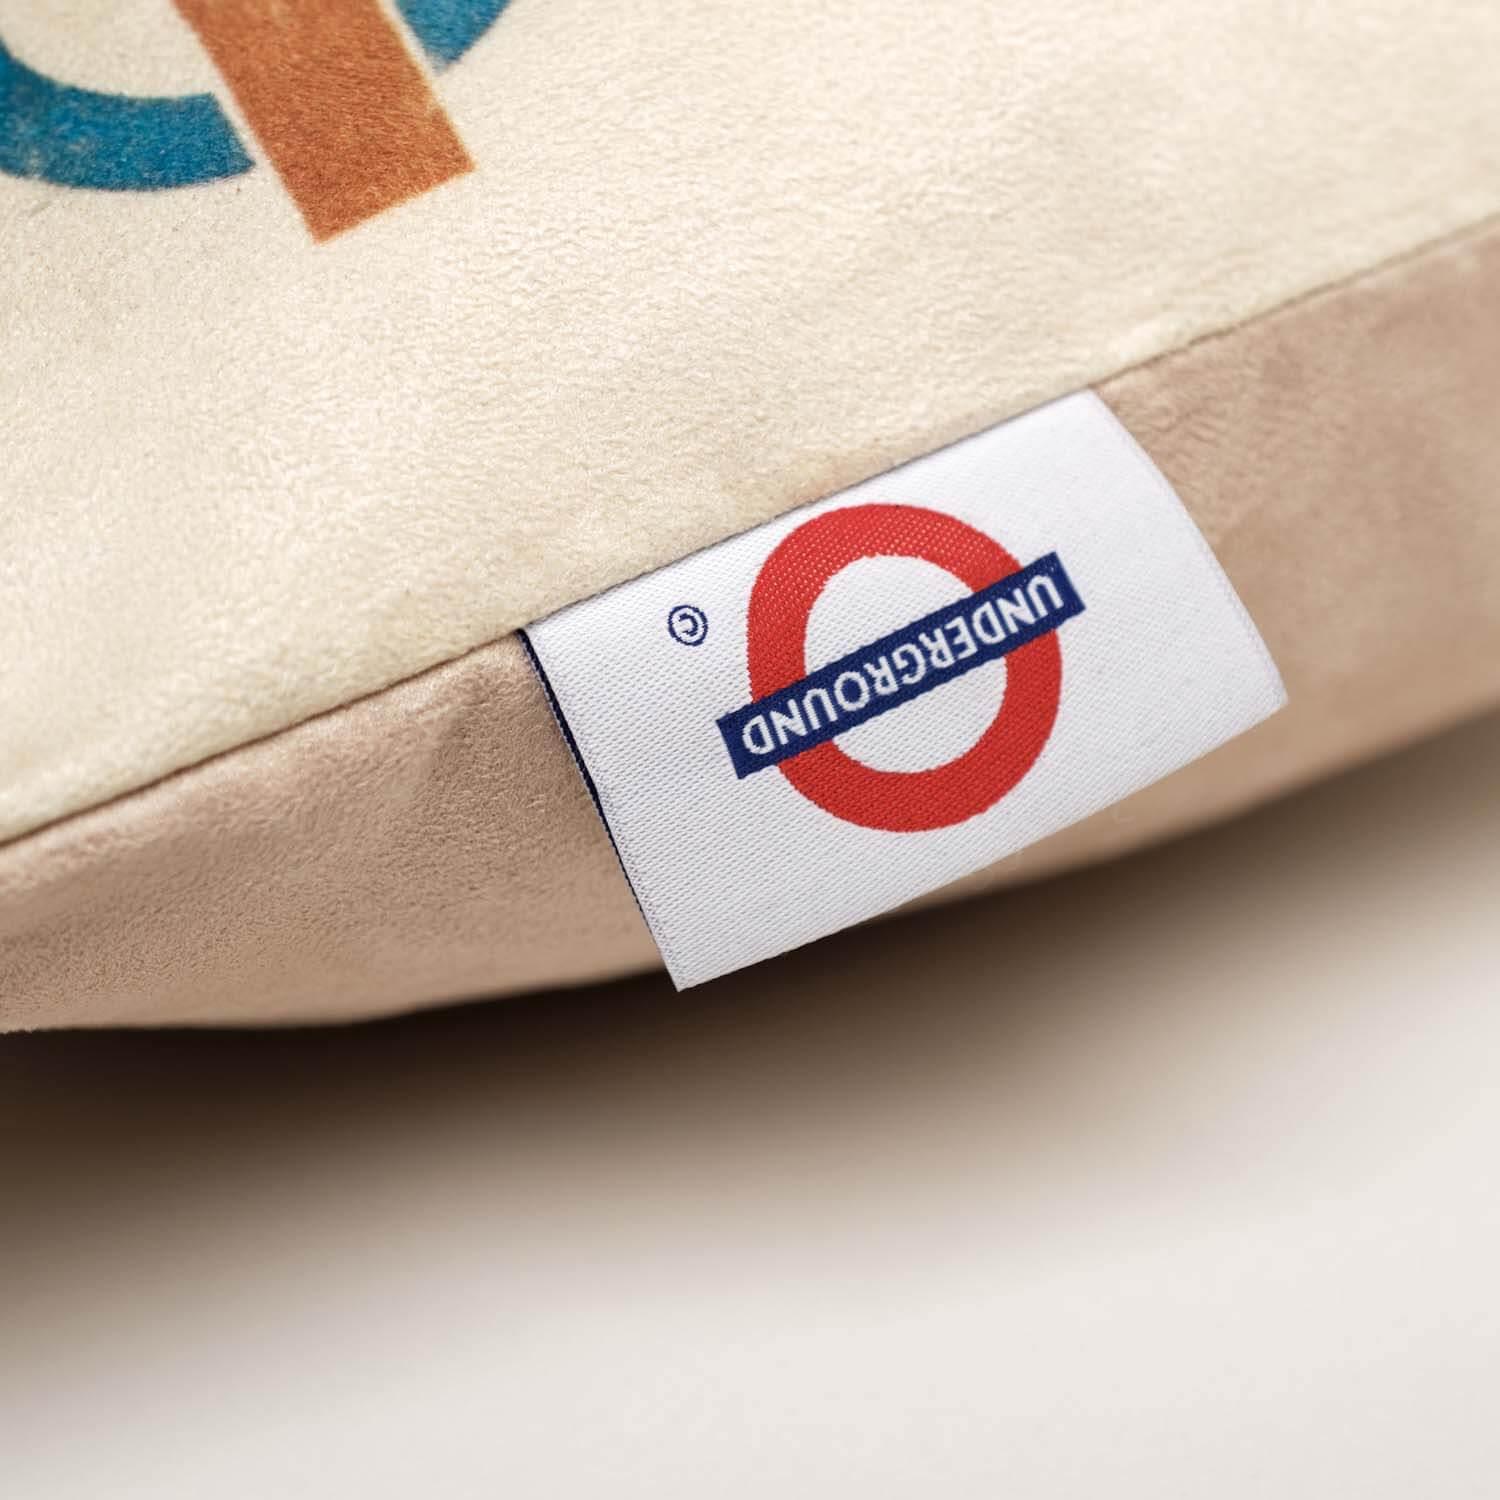 Epping Forest - London Transport Cushion - Handmade Cushions UK - WeLoveCushions